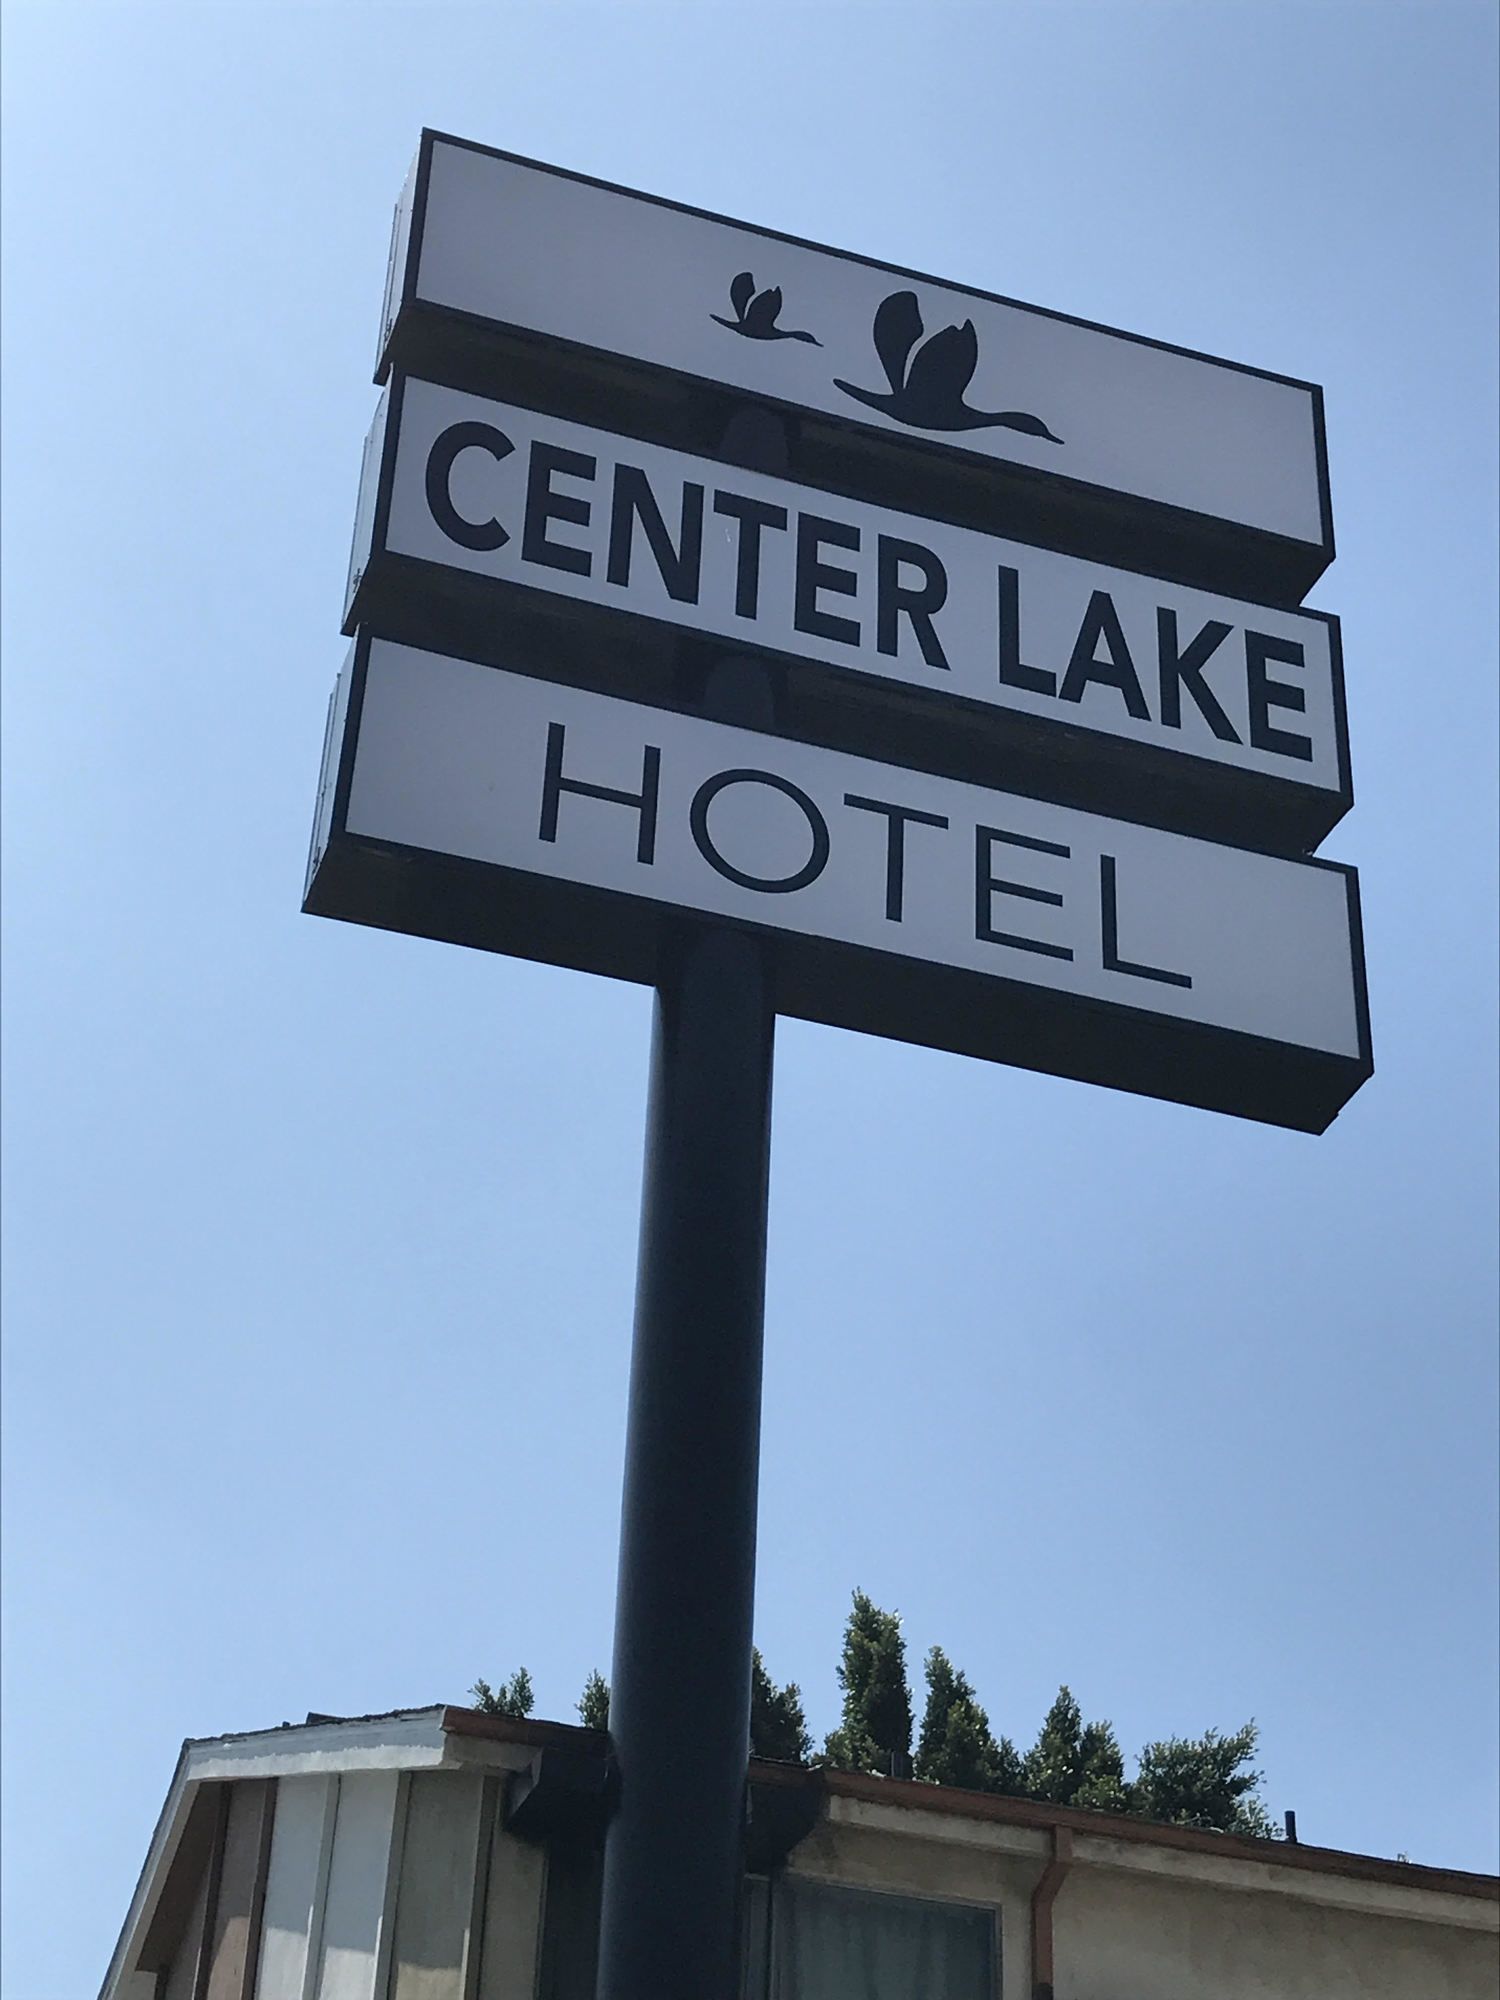 Center Lake Hotel